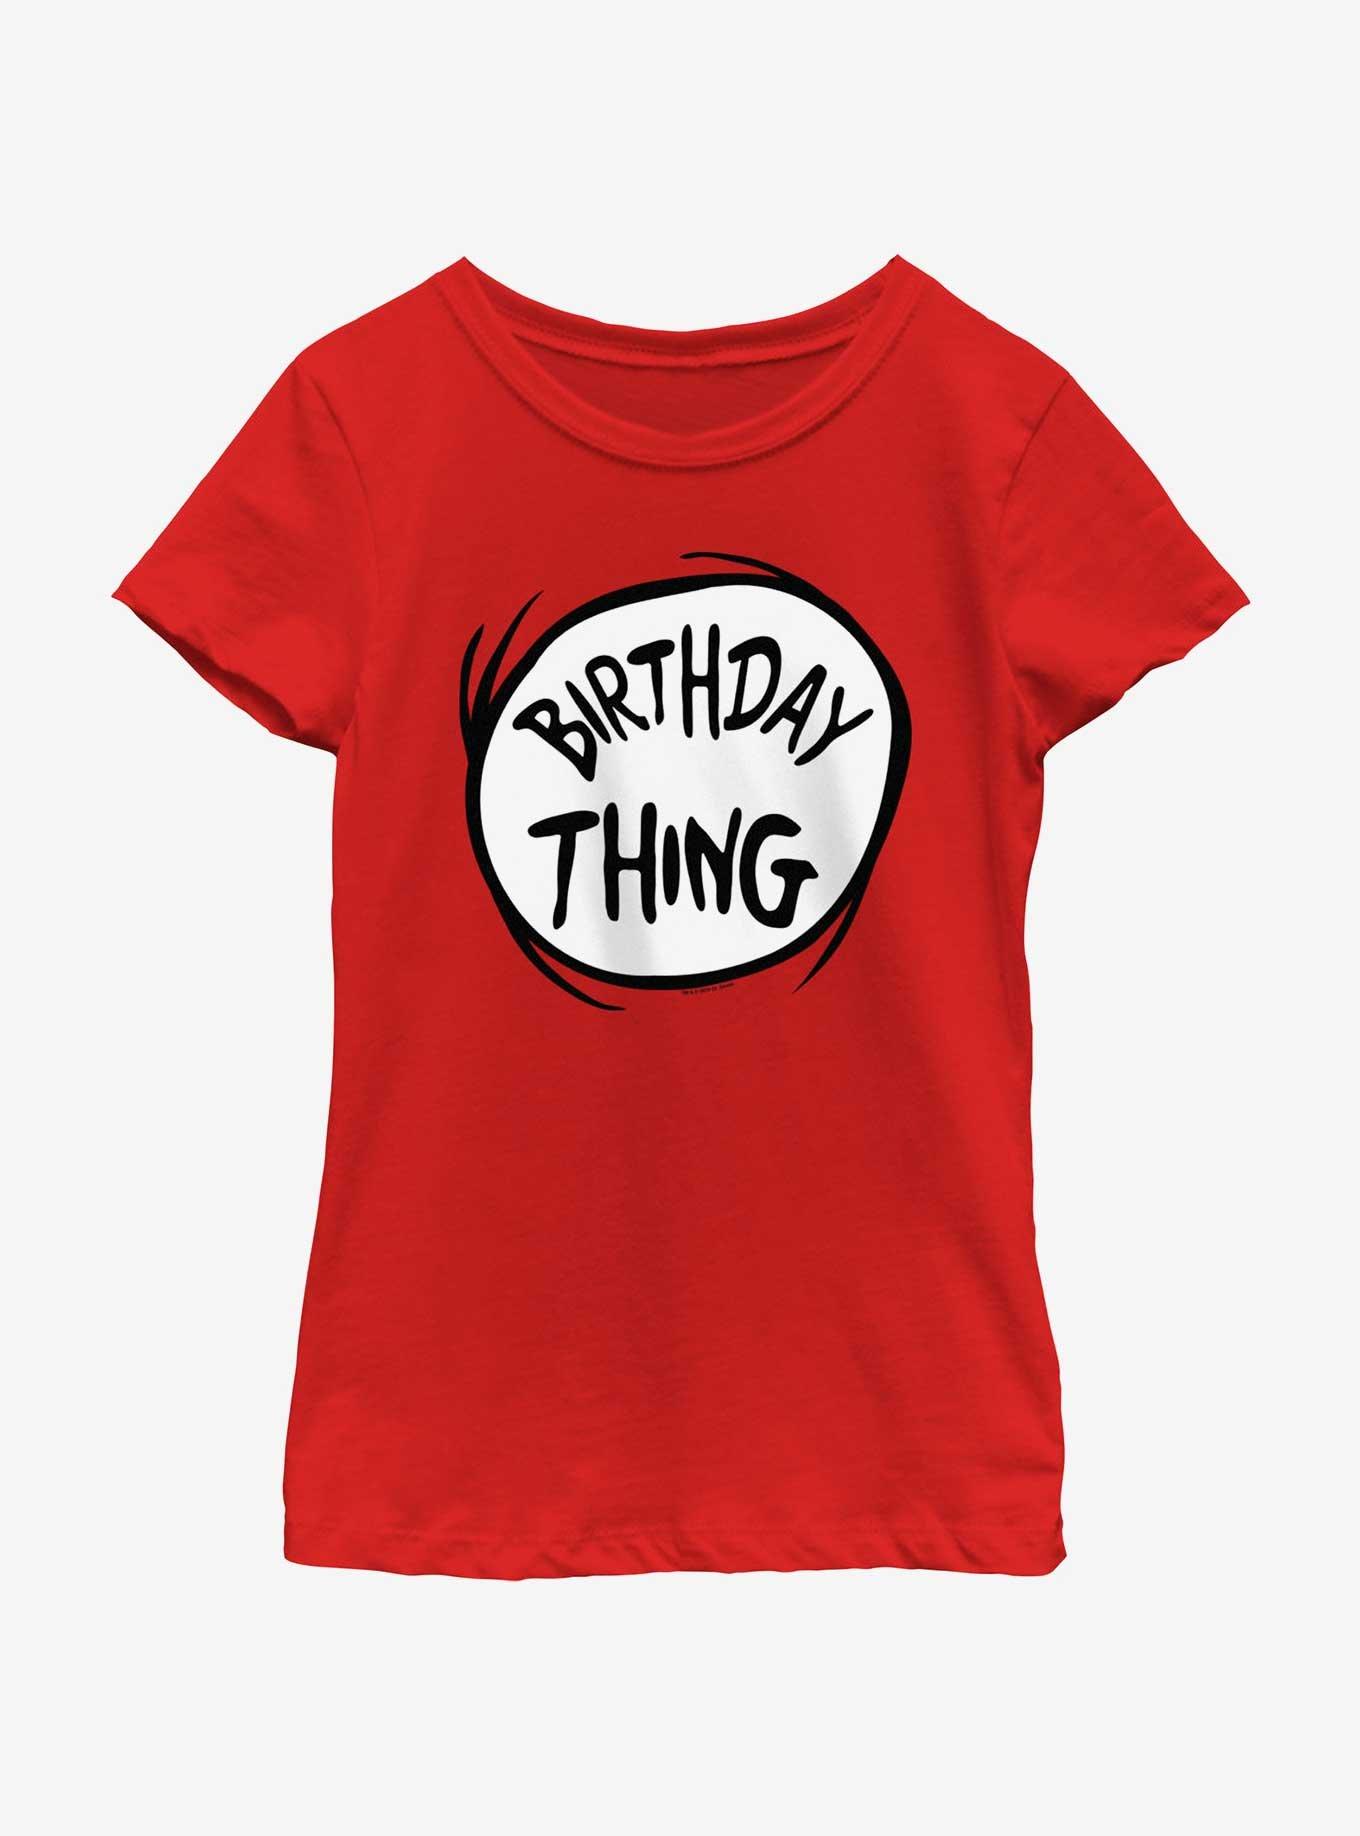 Dr. Seuss Birthday Thing Youth Girls T-Shirt, RED, hi-res